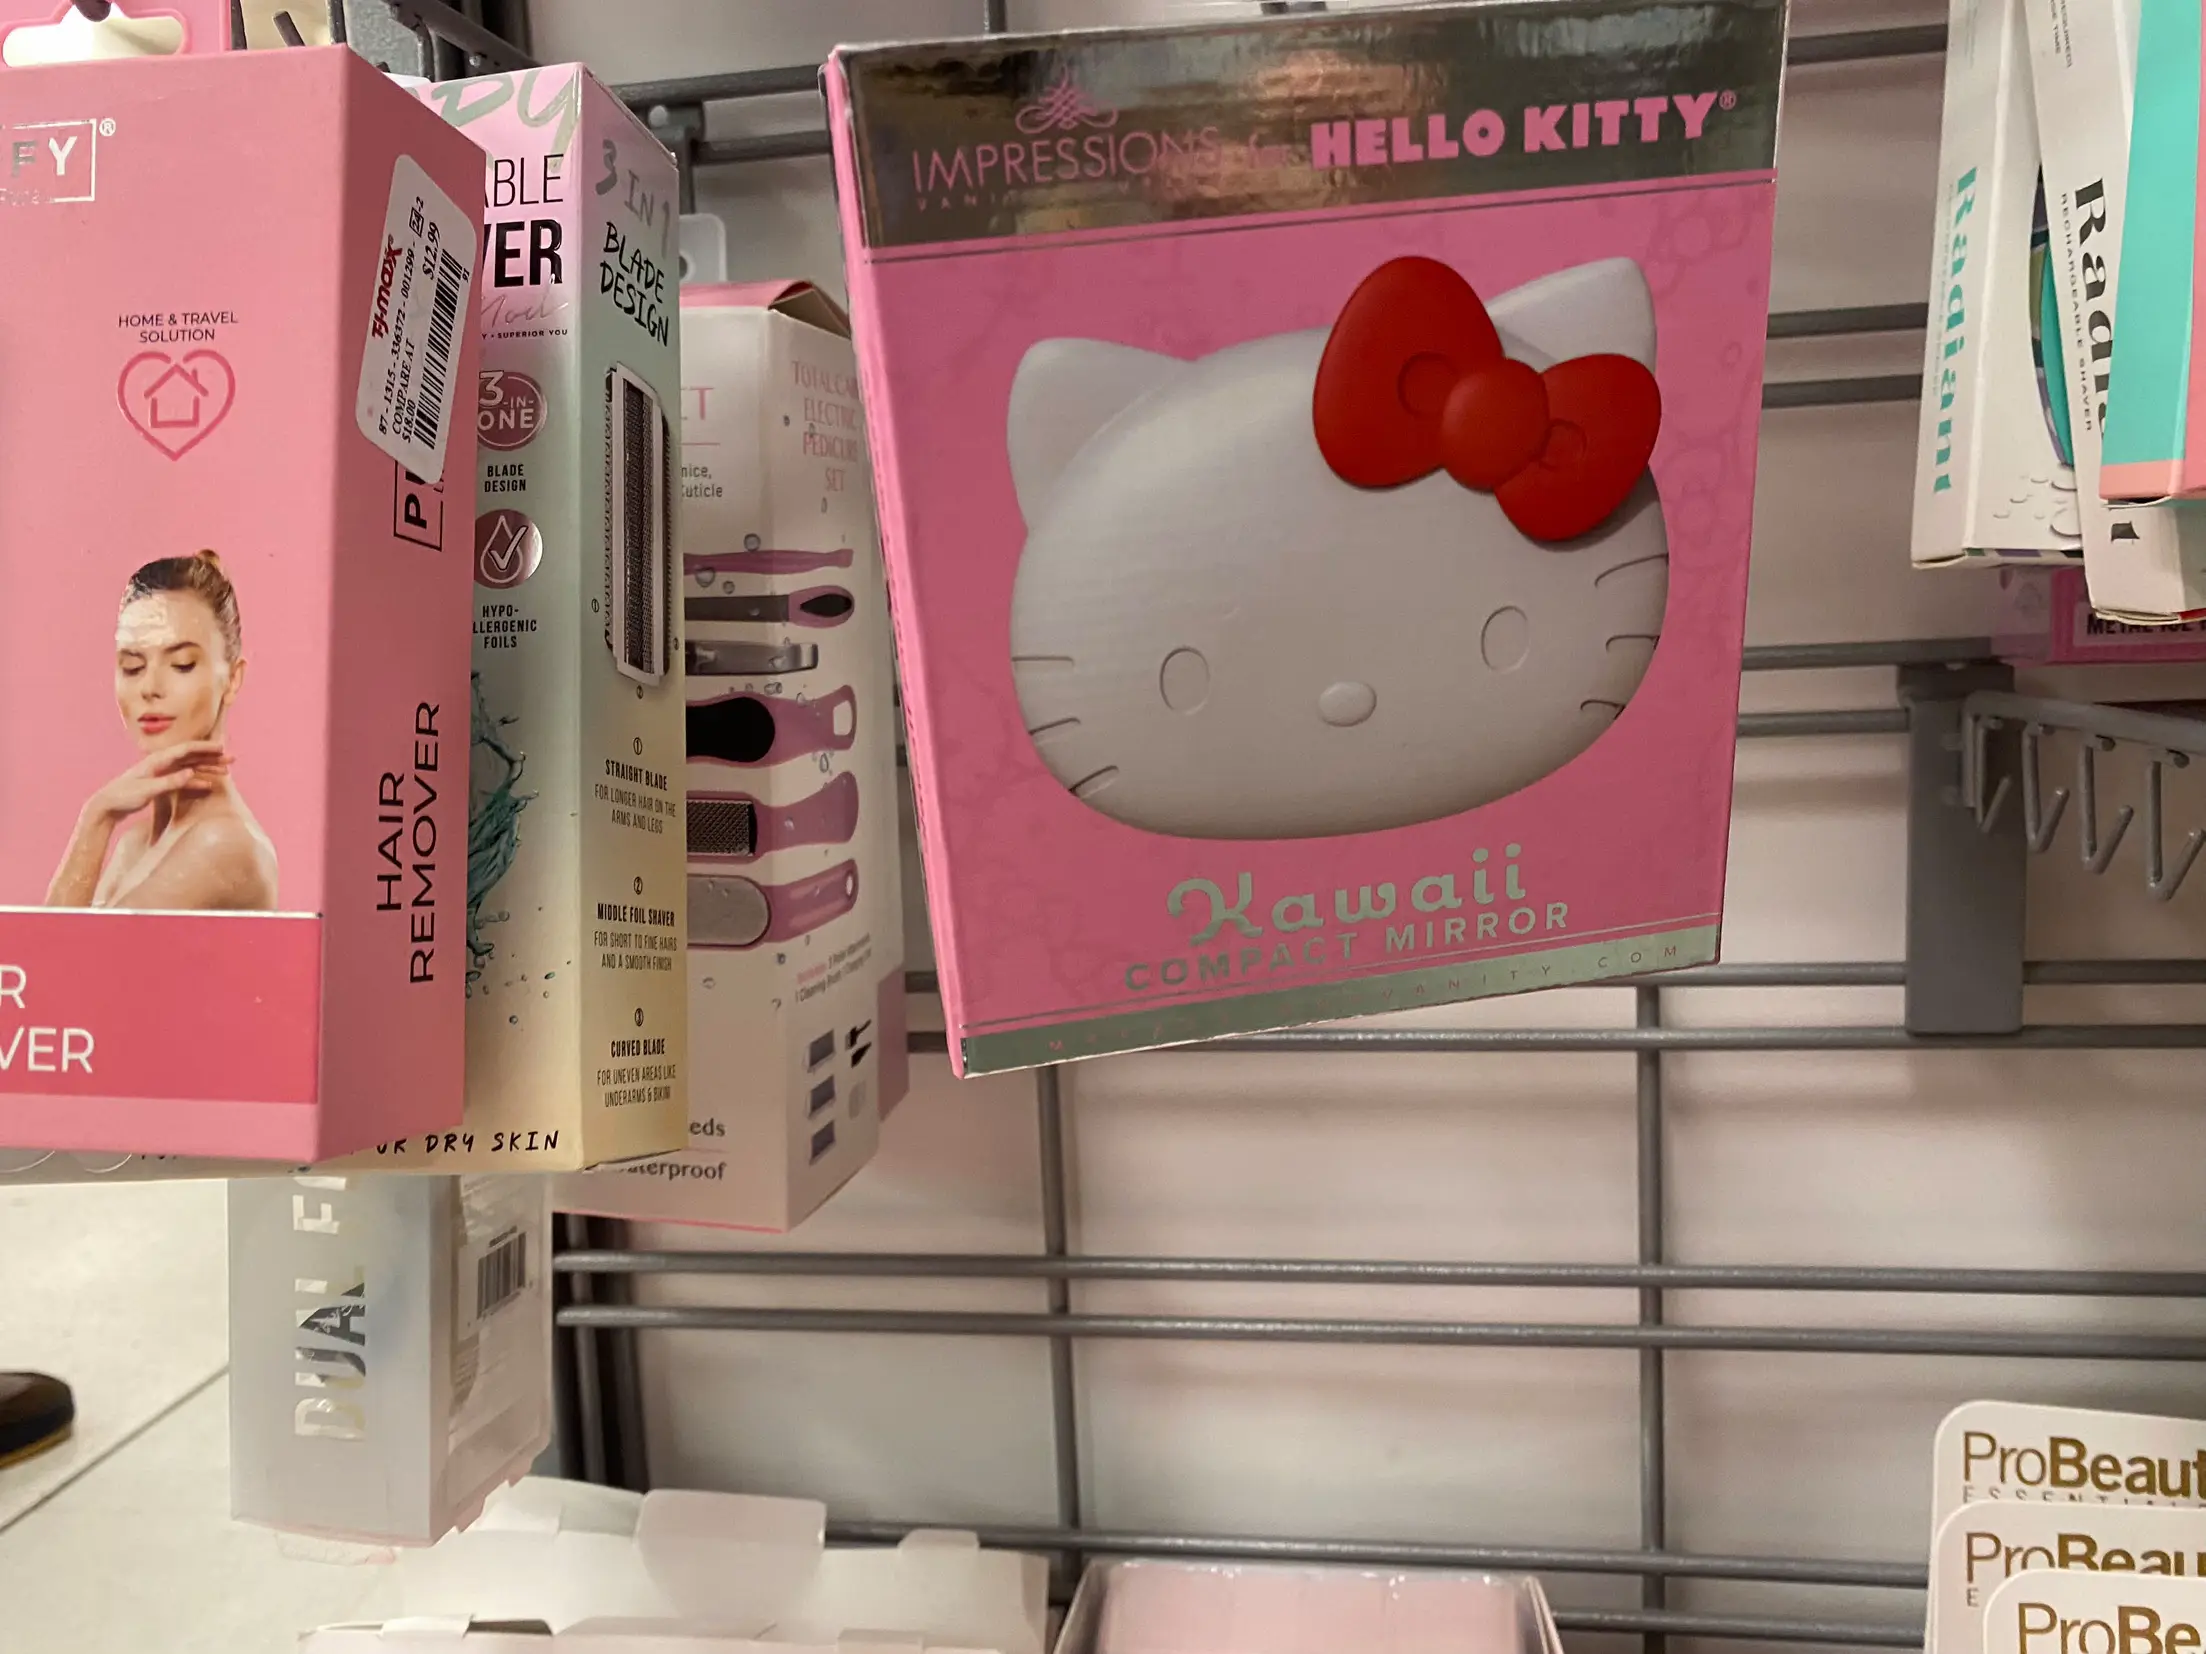 Baggu Hello Kitty Apple Stocking – Mostly K-pop